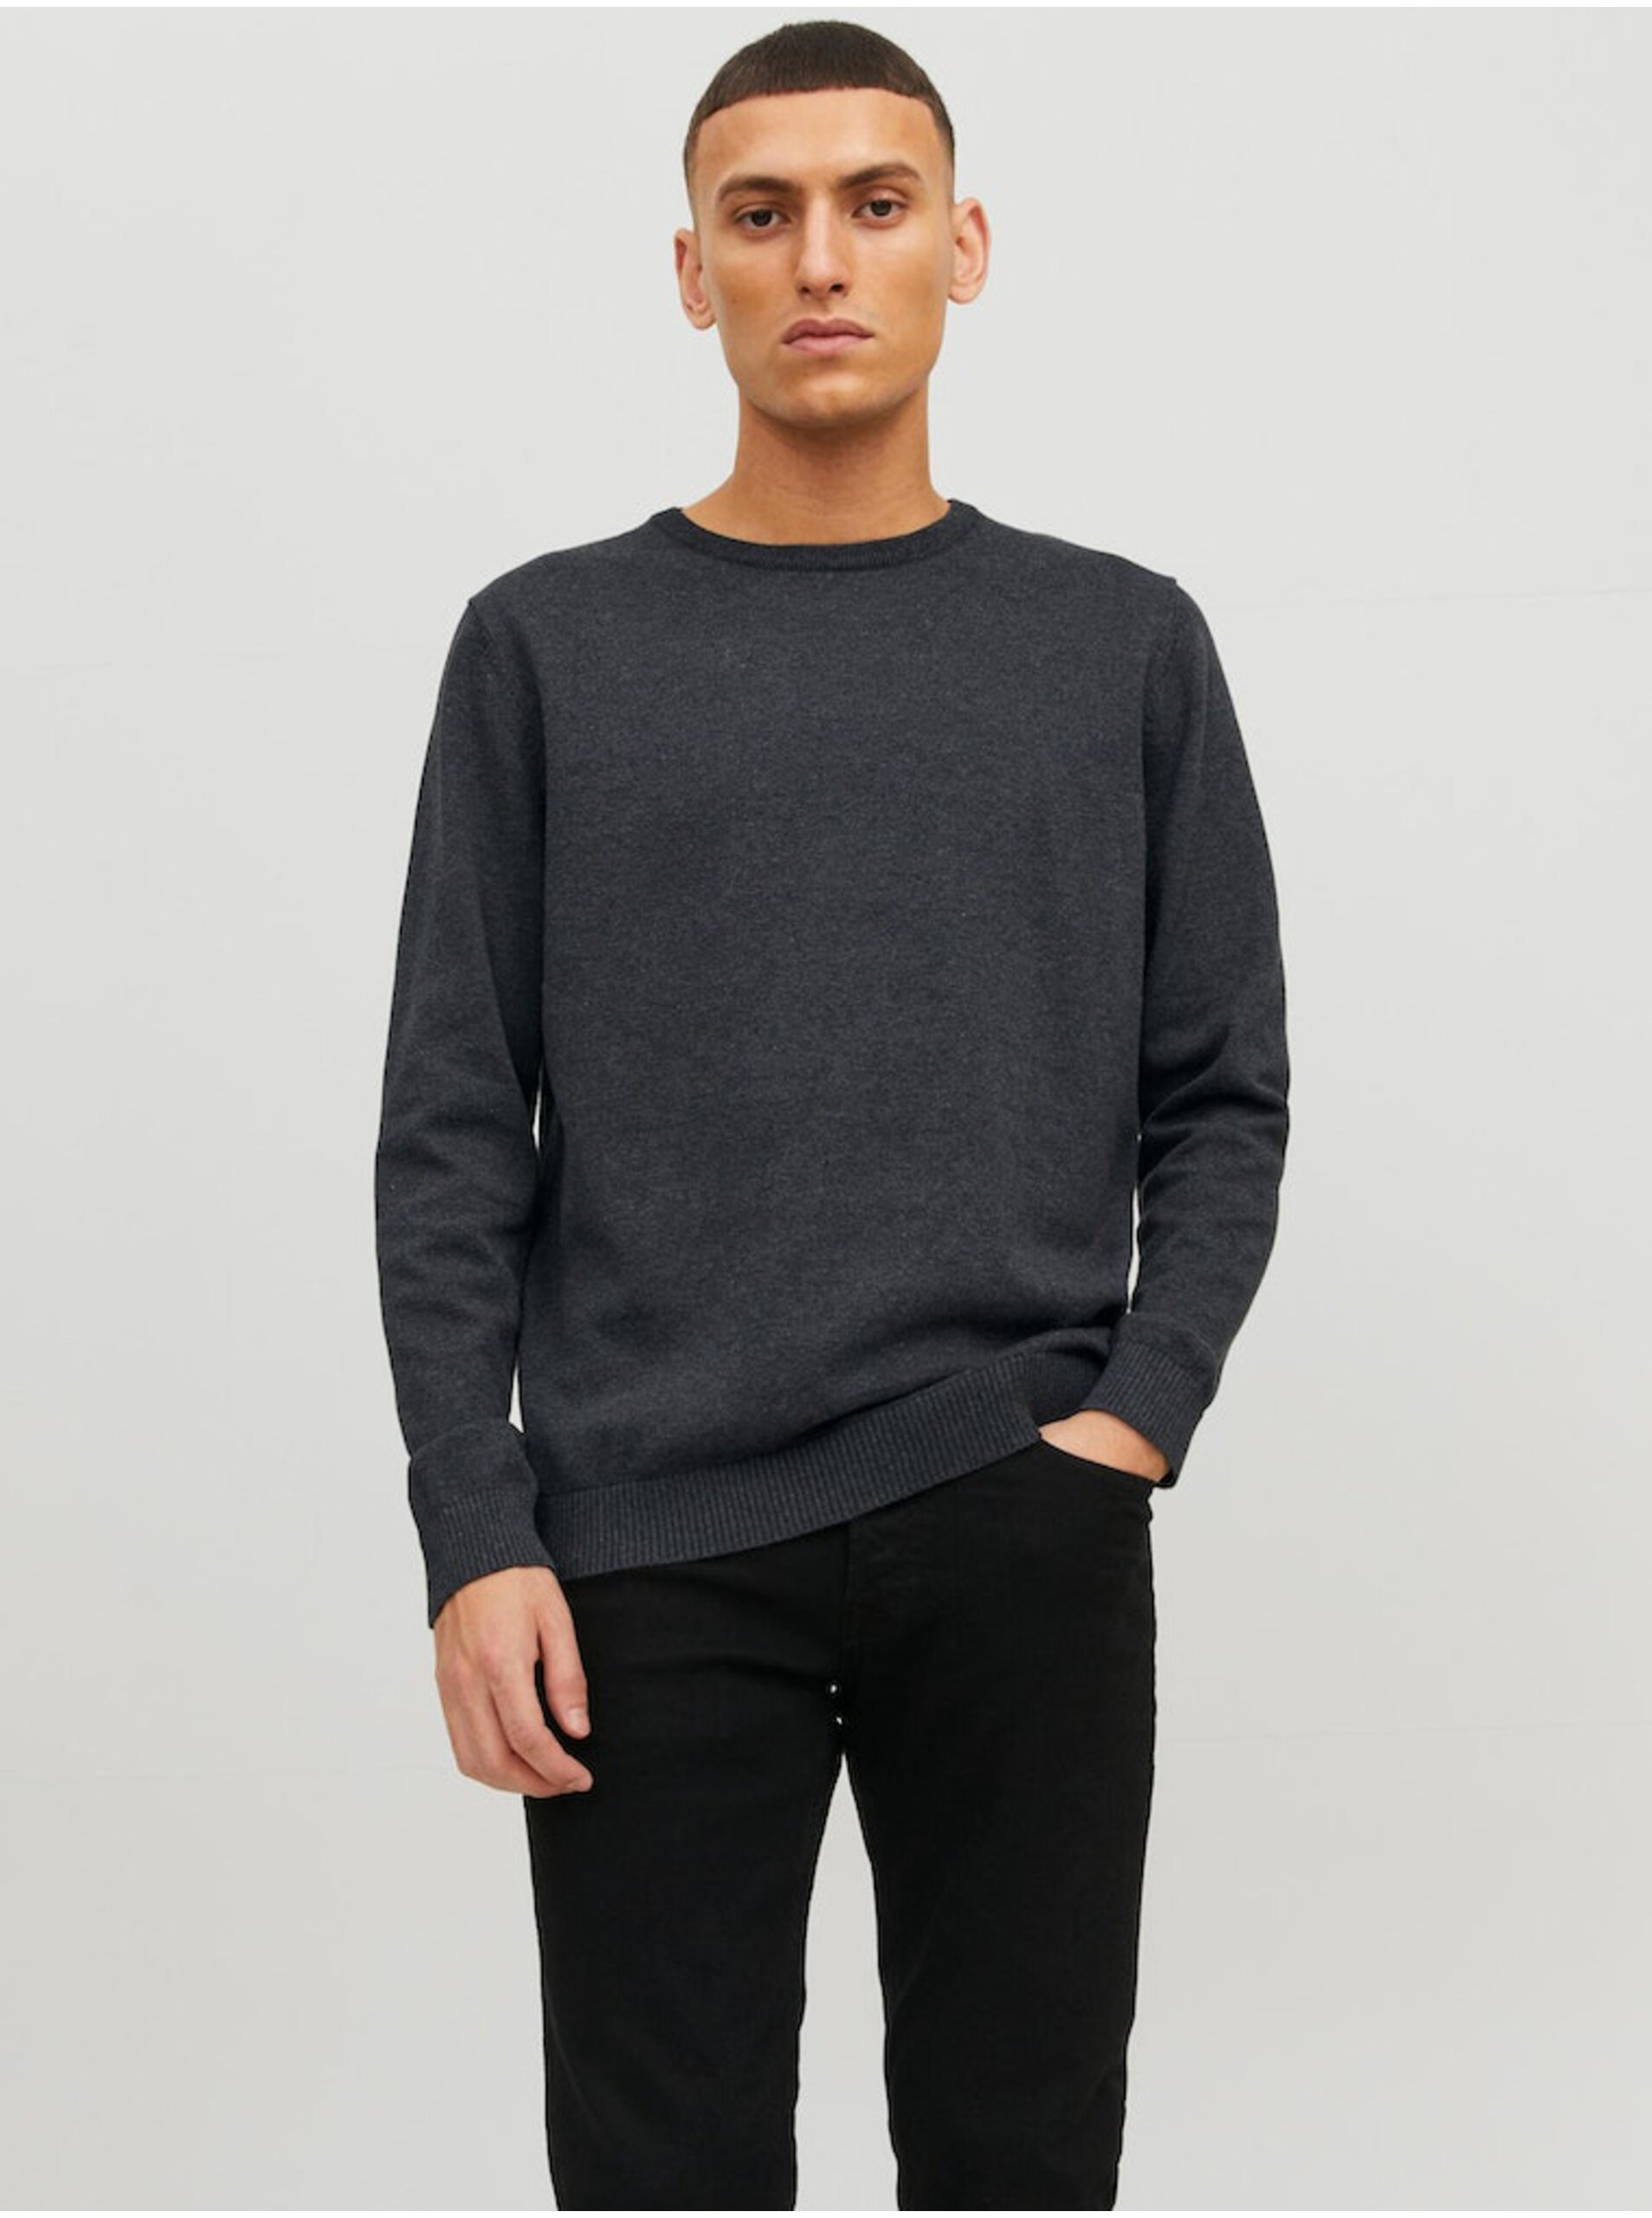 Men's Sweater Dark Grey Jack & Jones Basic - Men